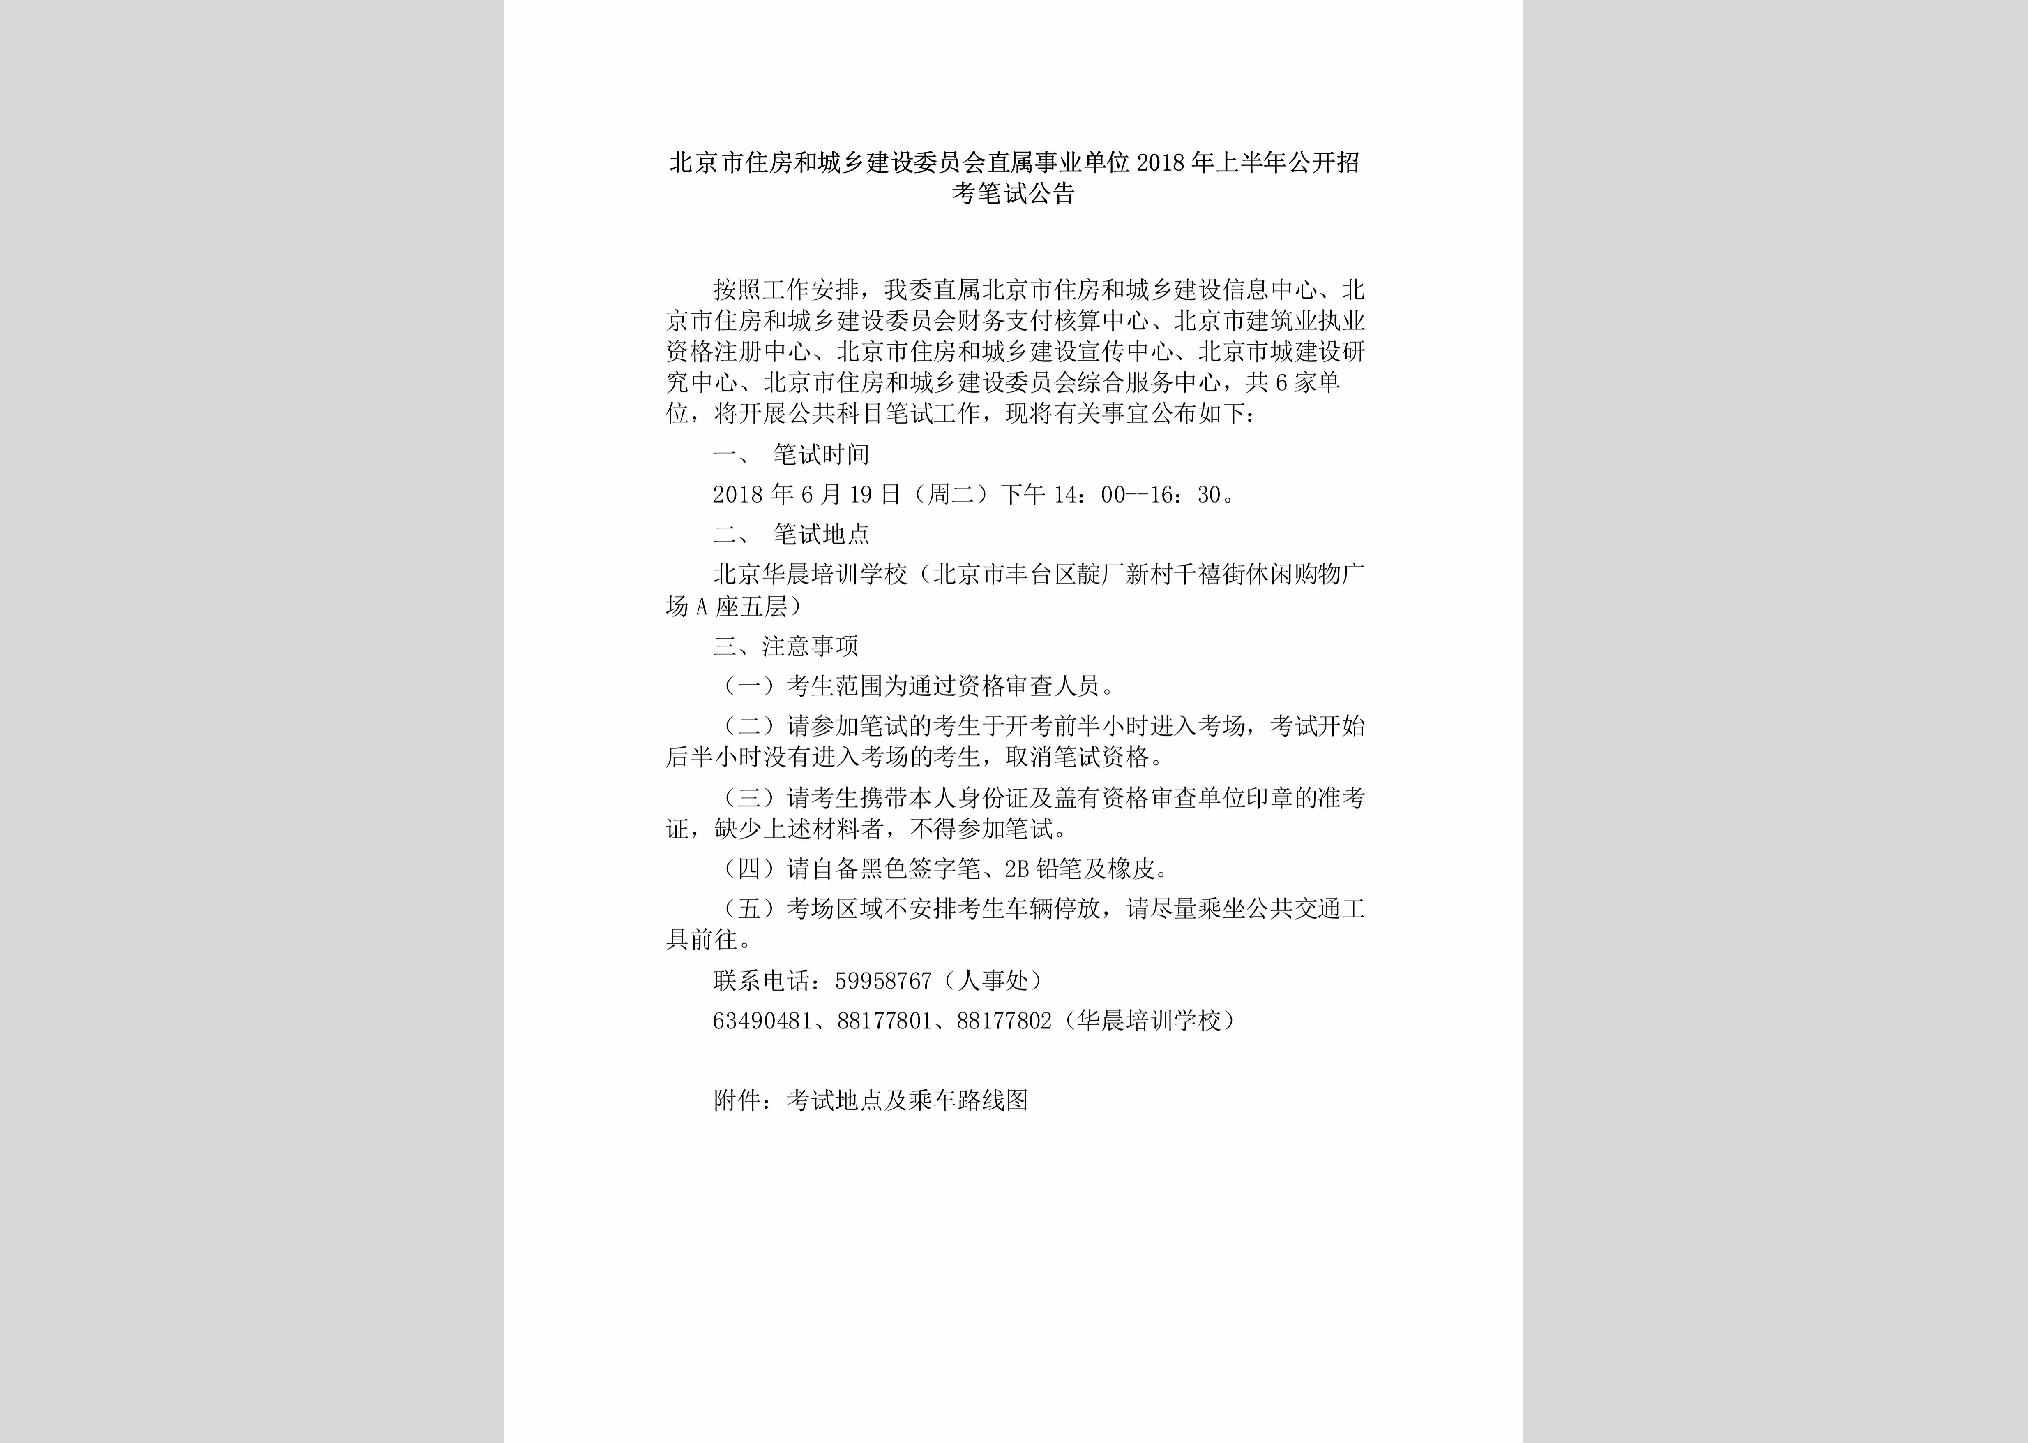 BJ-ZSSYDWBS-2018：北京市住房和城乡建设委员会直属事业单位2018年上半年公开招考笔试公告